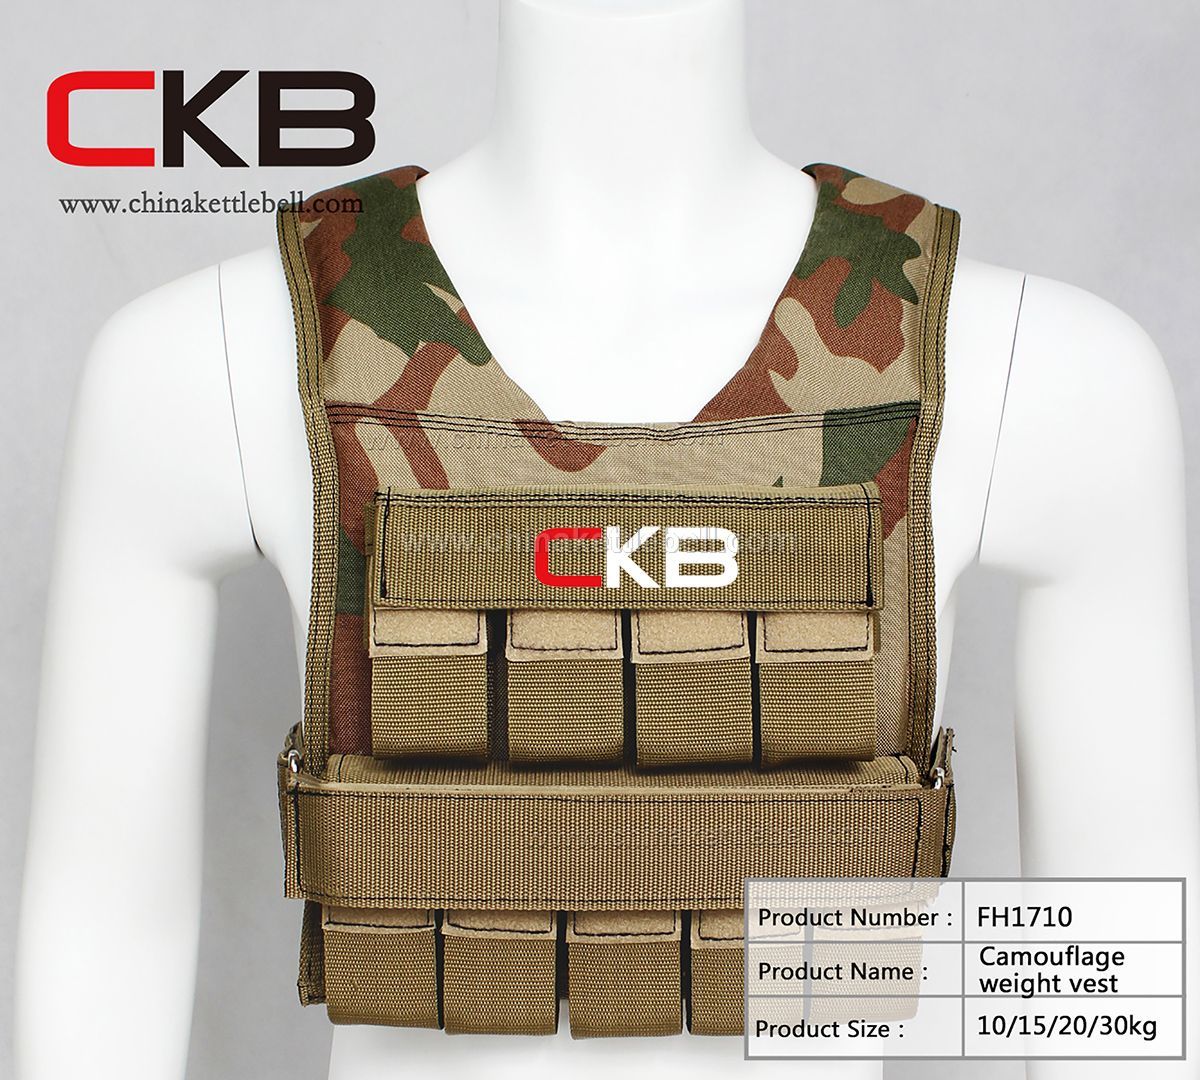 Camouflage weight vest